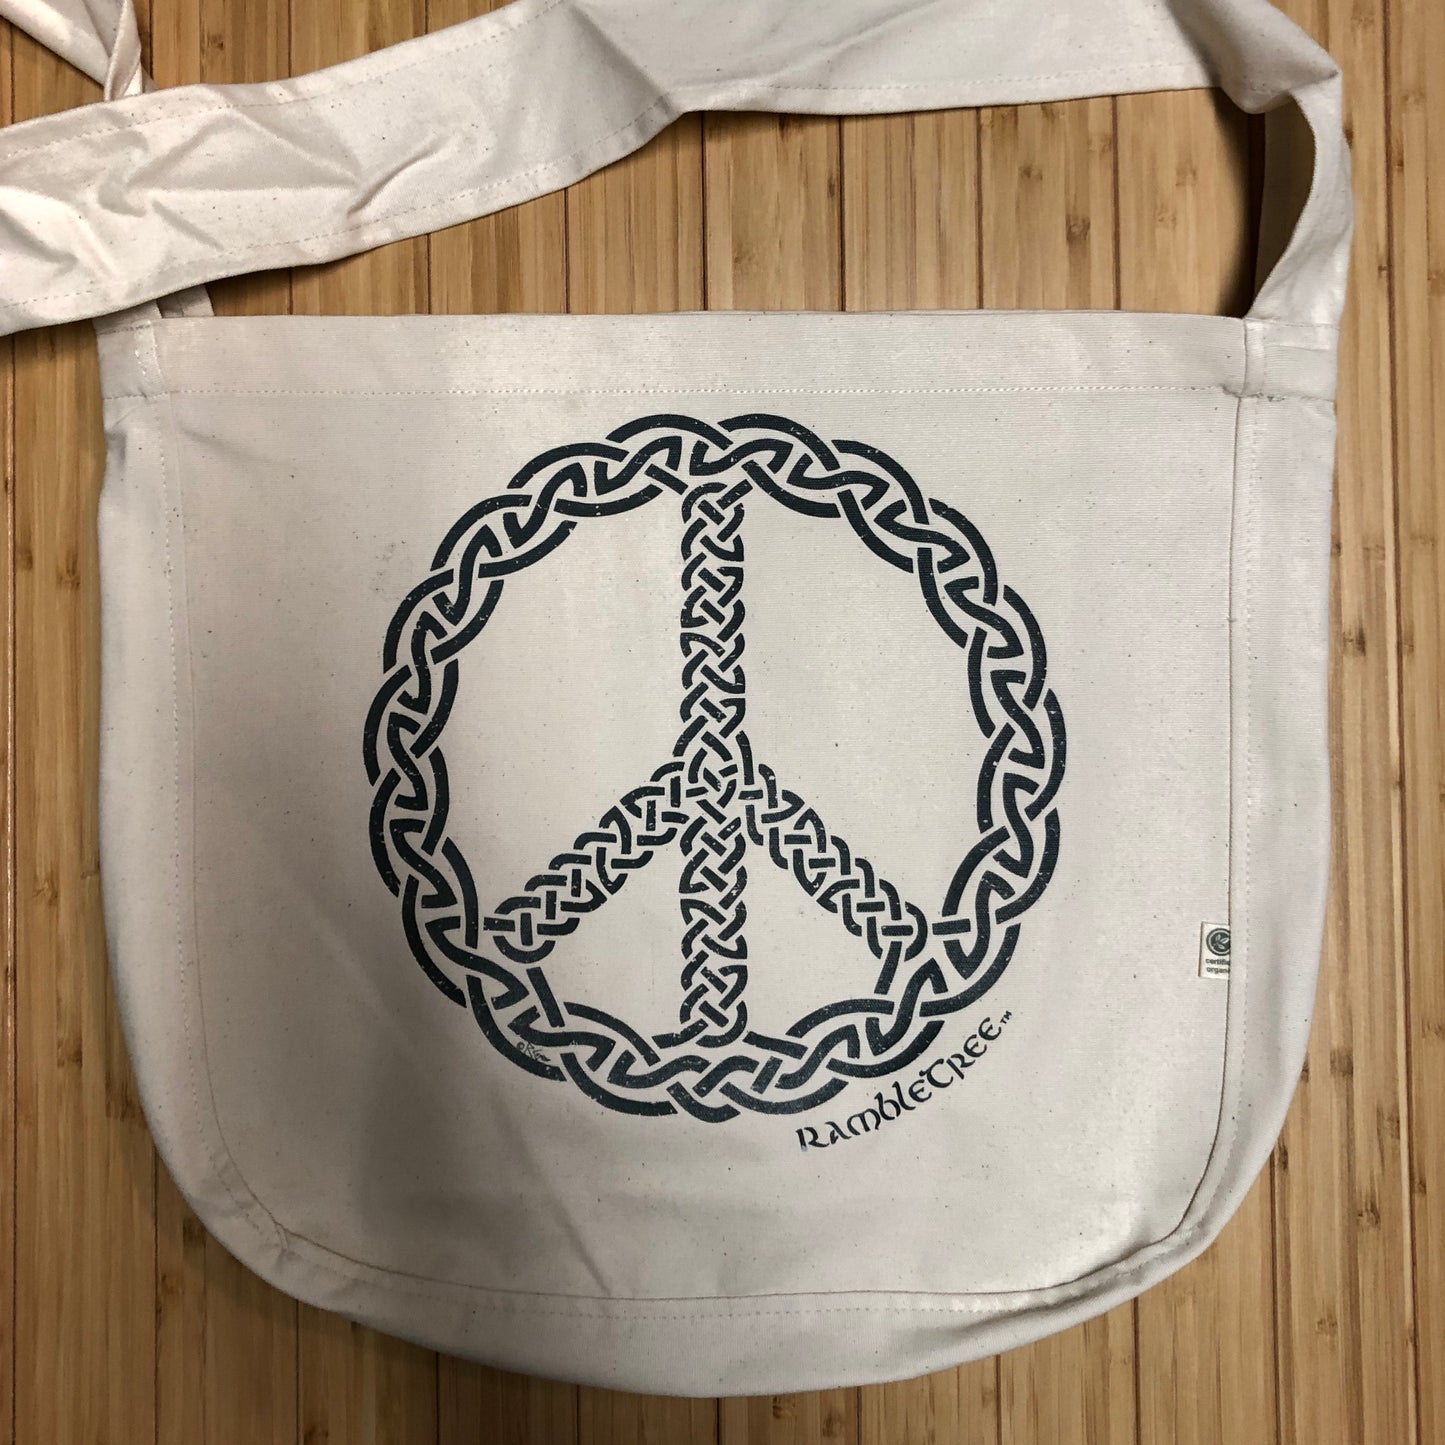 Peace Knot War - Organic tote/shoulder bag